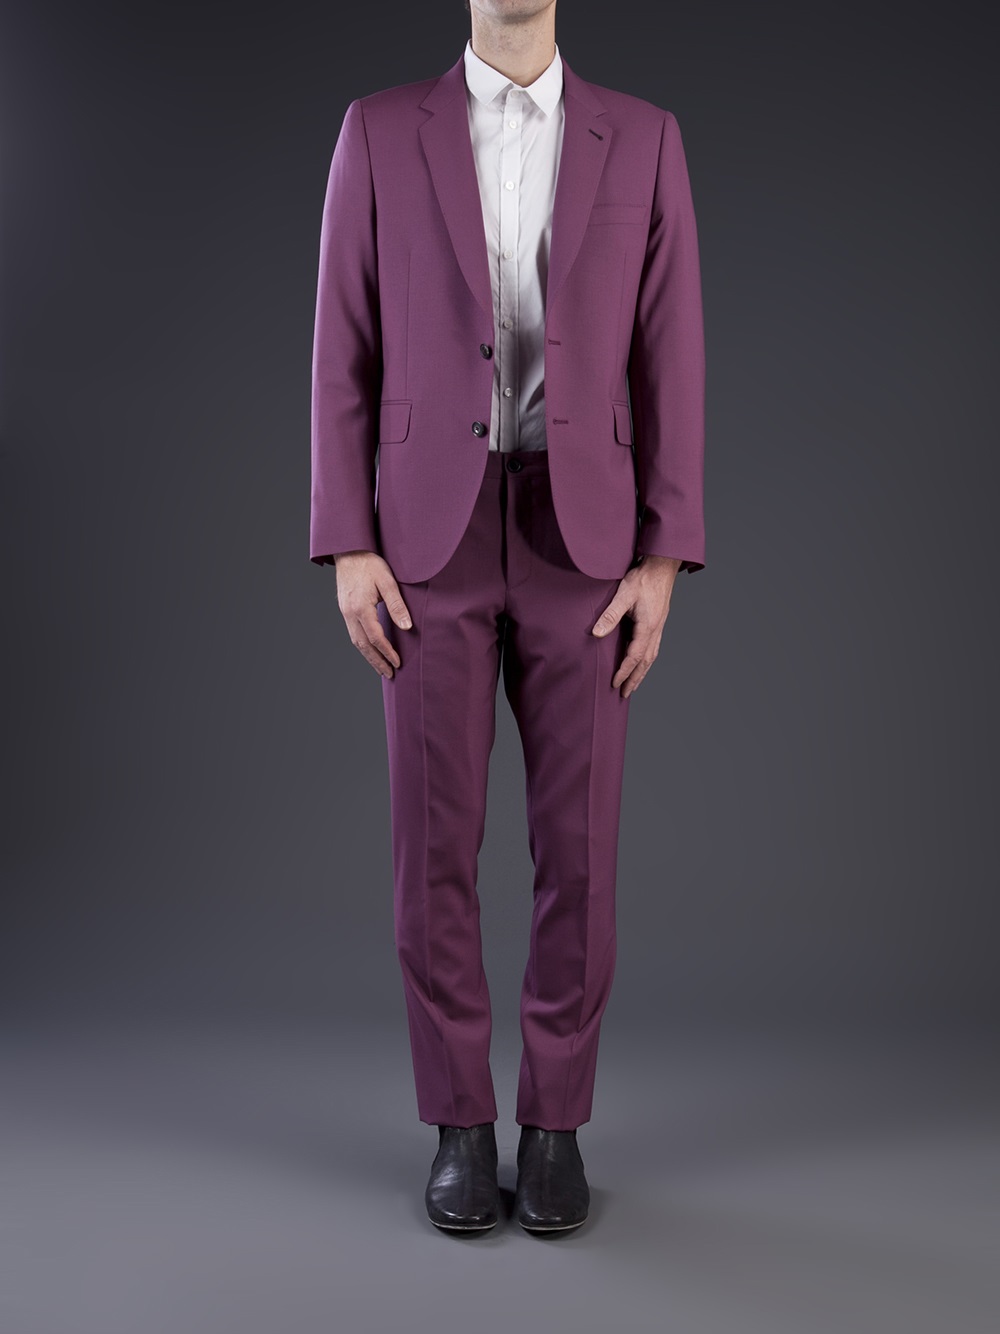 Paul Smith Formal Suit in Pink & Purple (Purple) for Men - Lyst